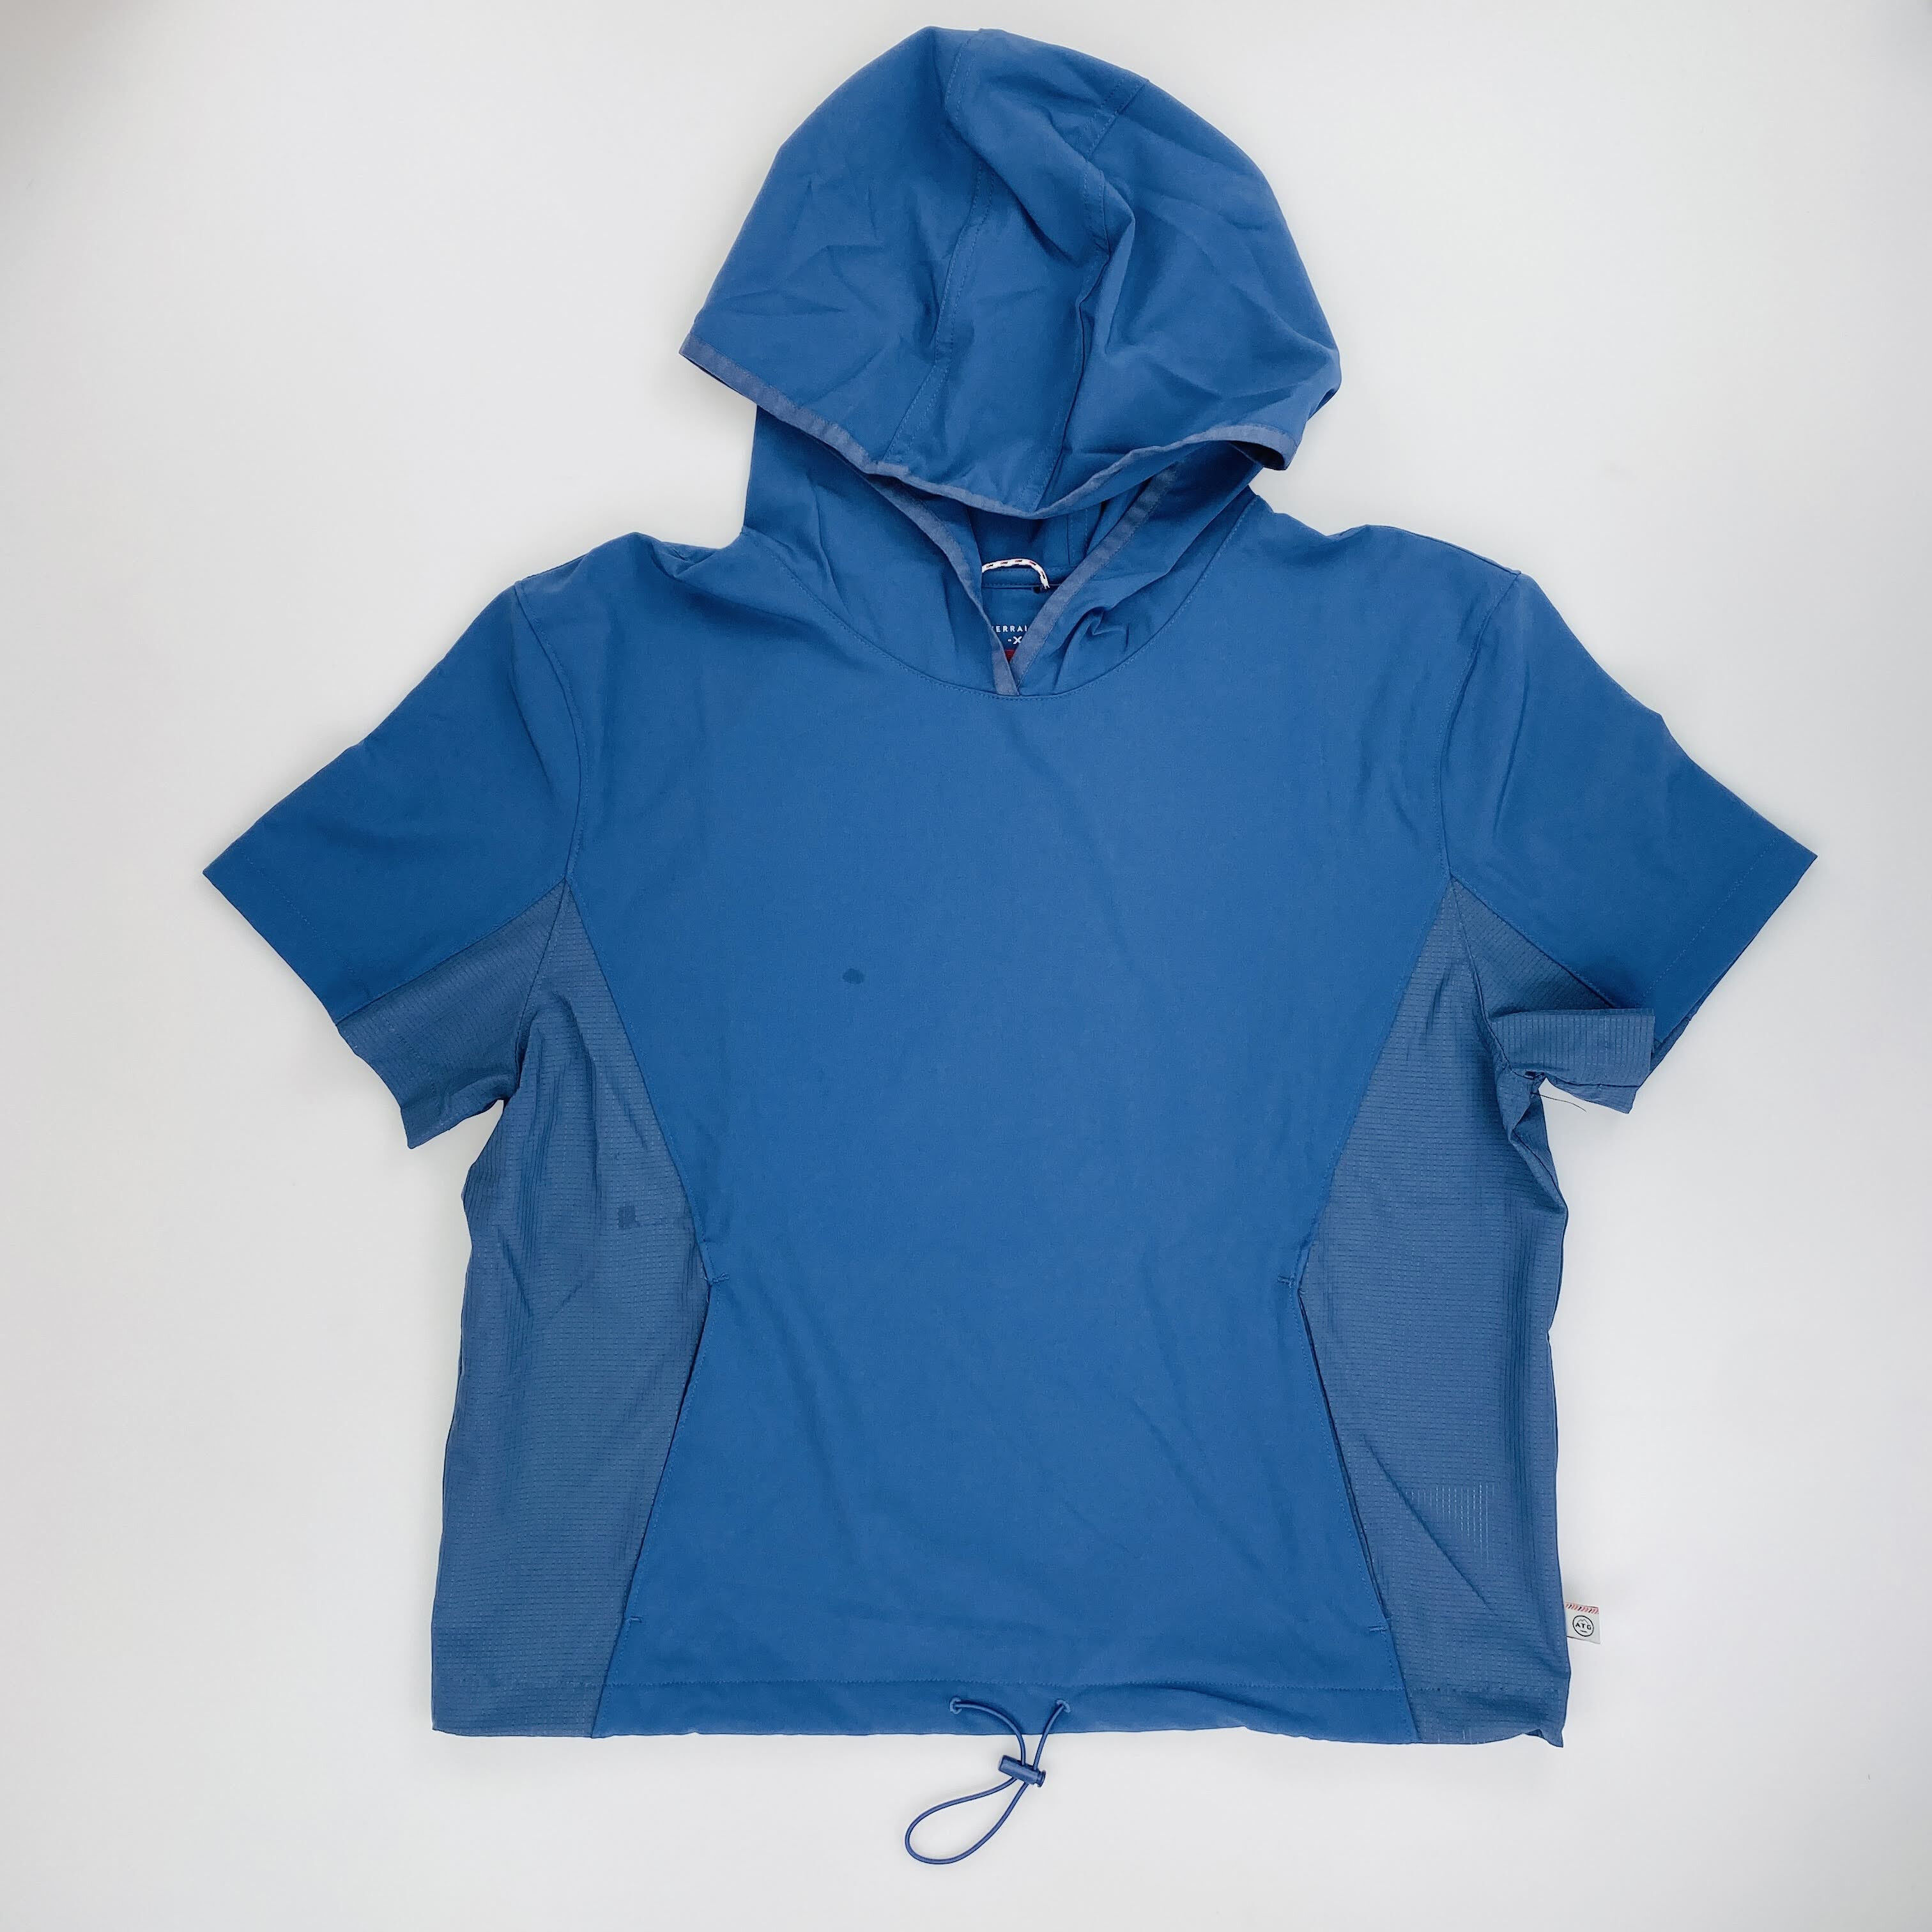 Wrangler Ss Hooded Tee - Seconde main T-shirt femme - Bleu - S | Hardloop